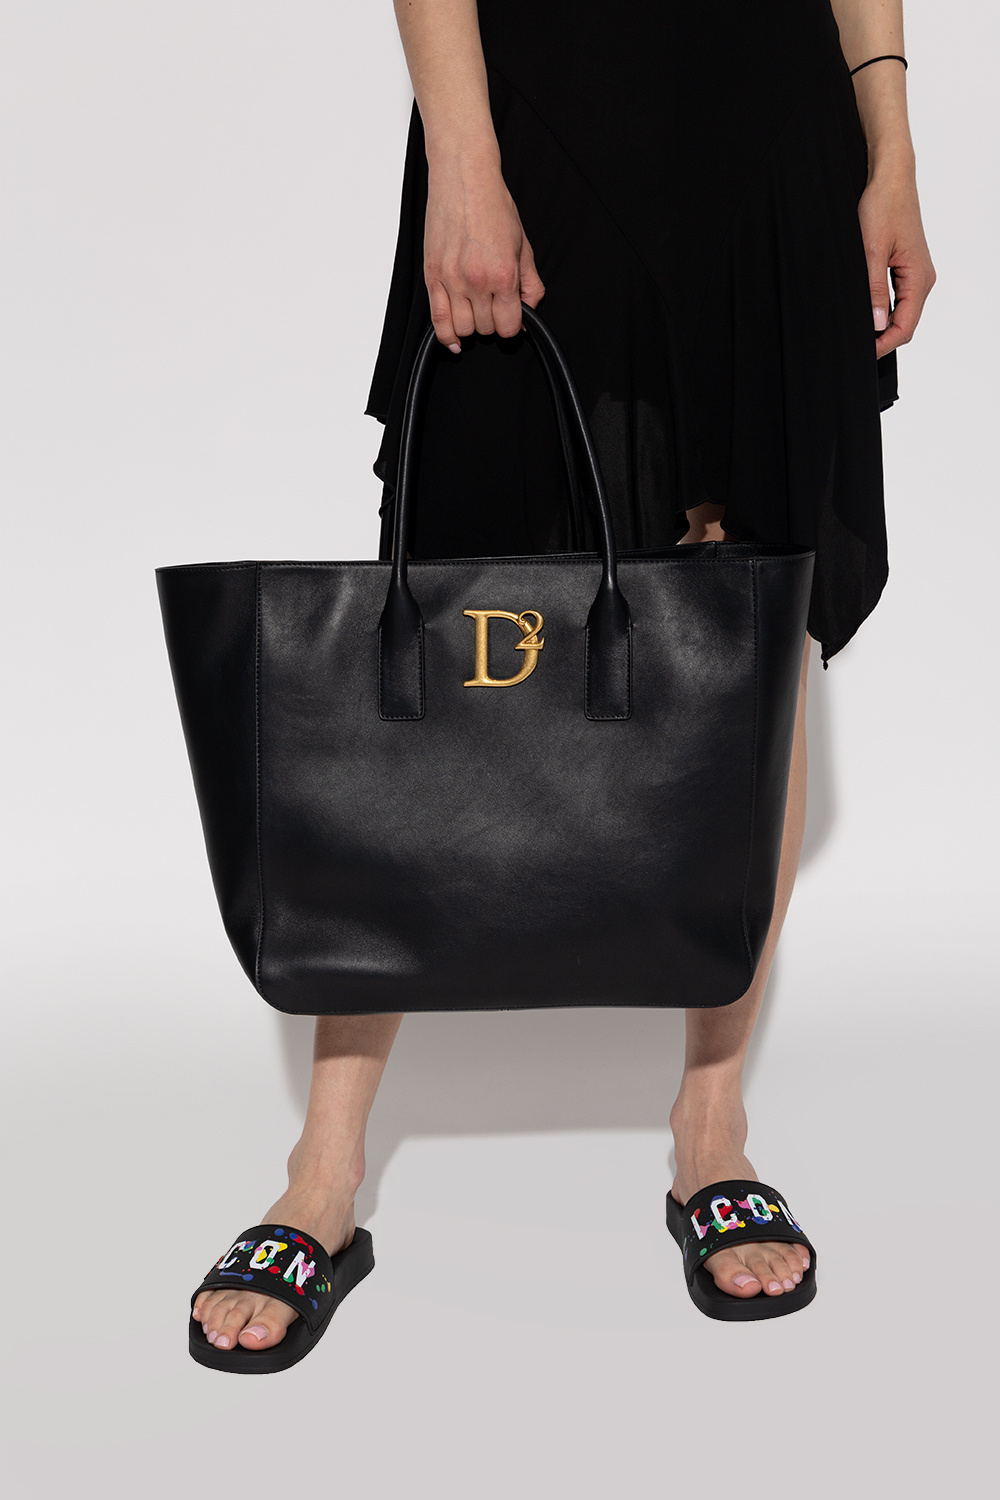 DKNY Carol Medium Tote Bag